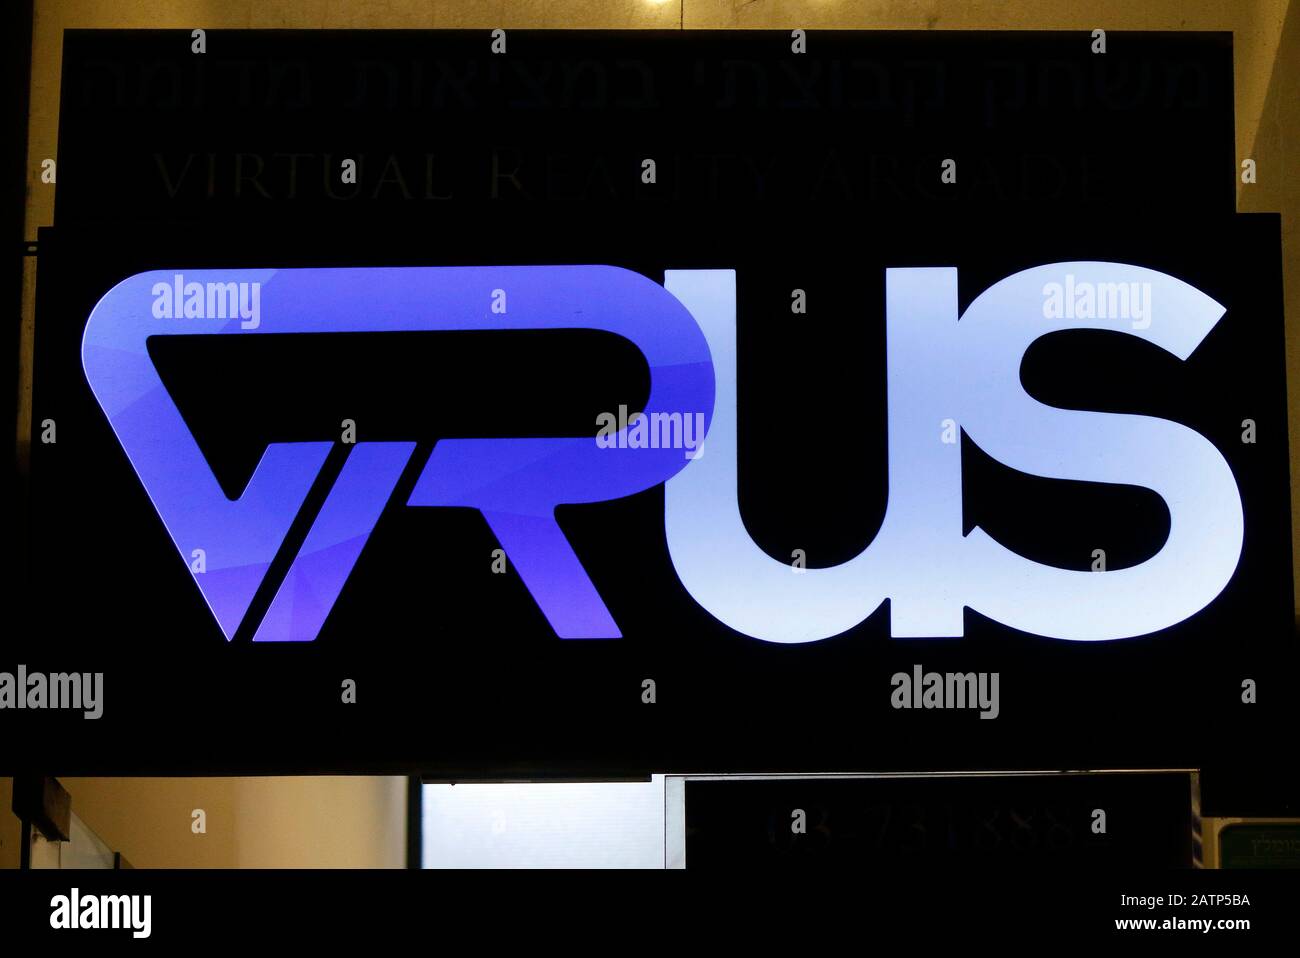 Das Logo der Marke/ el logotipo de la Marca "VRU", Tel Aviv, Israel (nur fuer redaktionelle Verwendung. Kine Werbung. Referenzdatenbank: http://www.36 Foto de stock